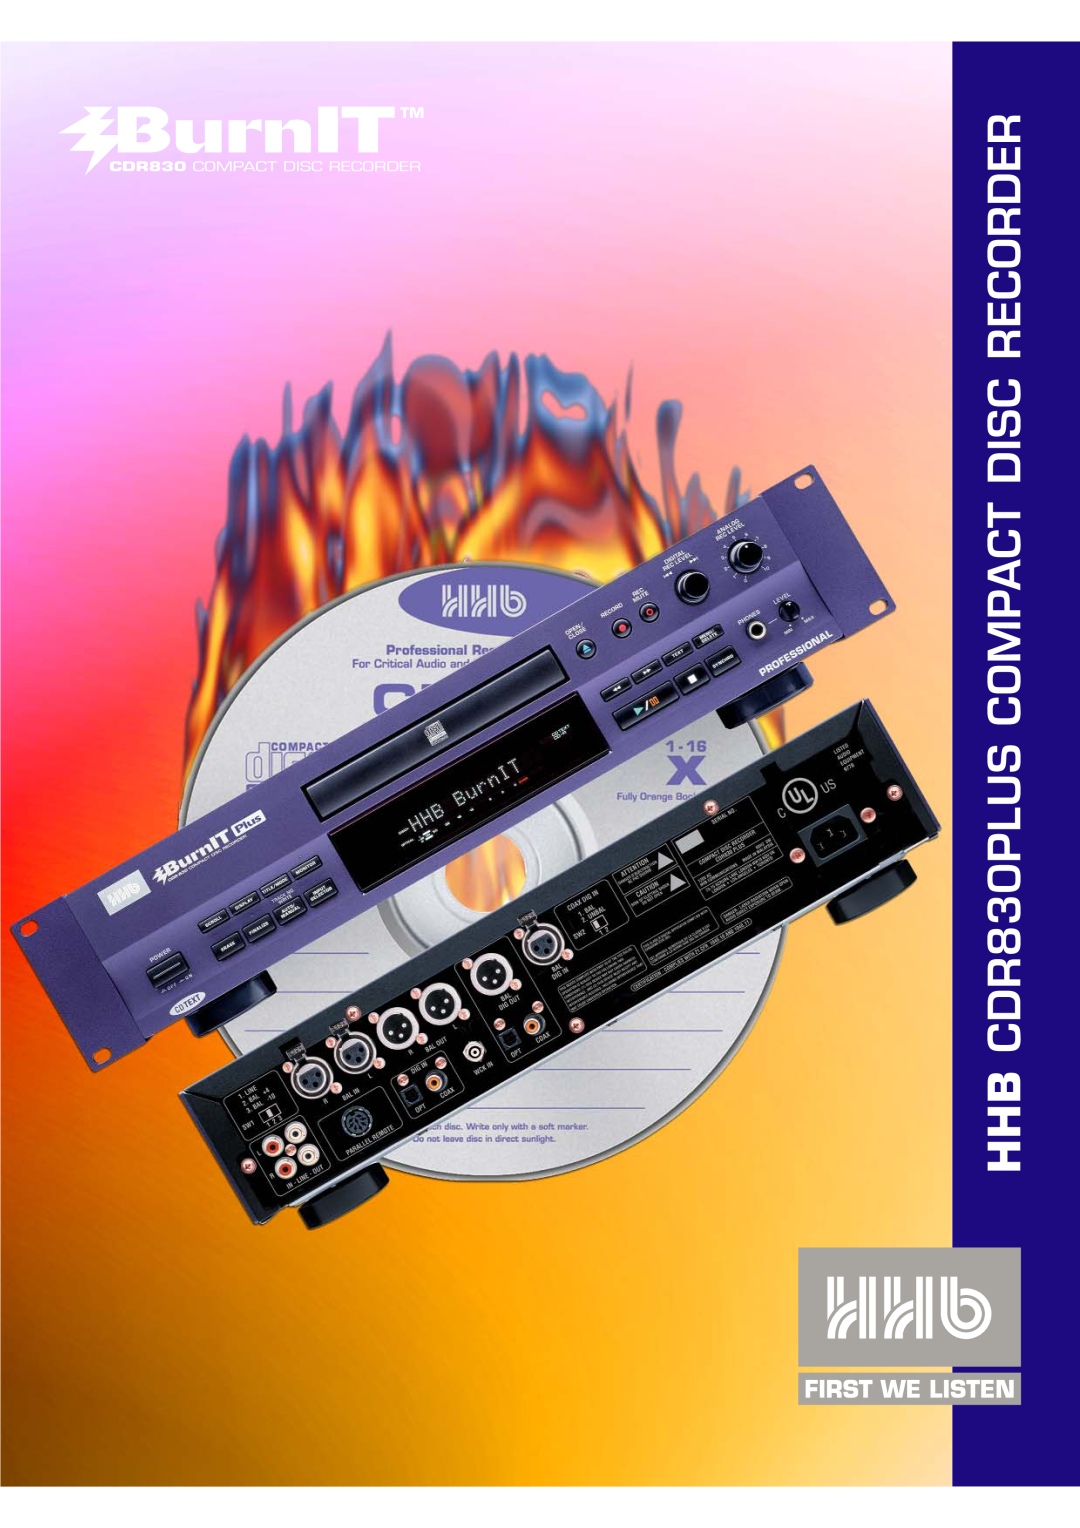 HHB comm brochure HHB CDR830PLUS COMPACT DISC RECORDER 